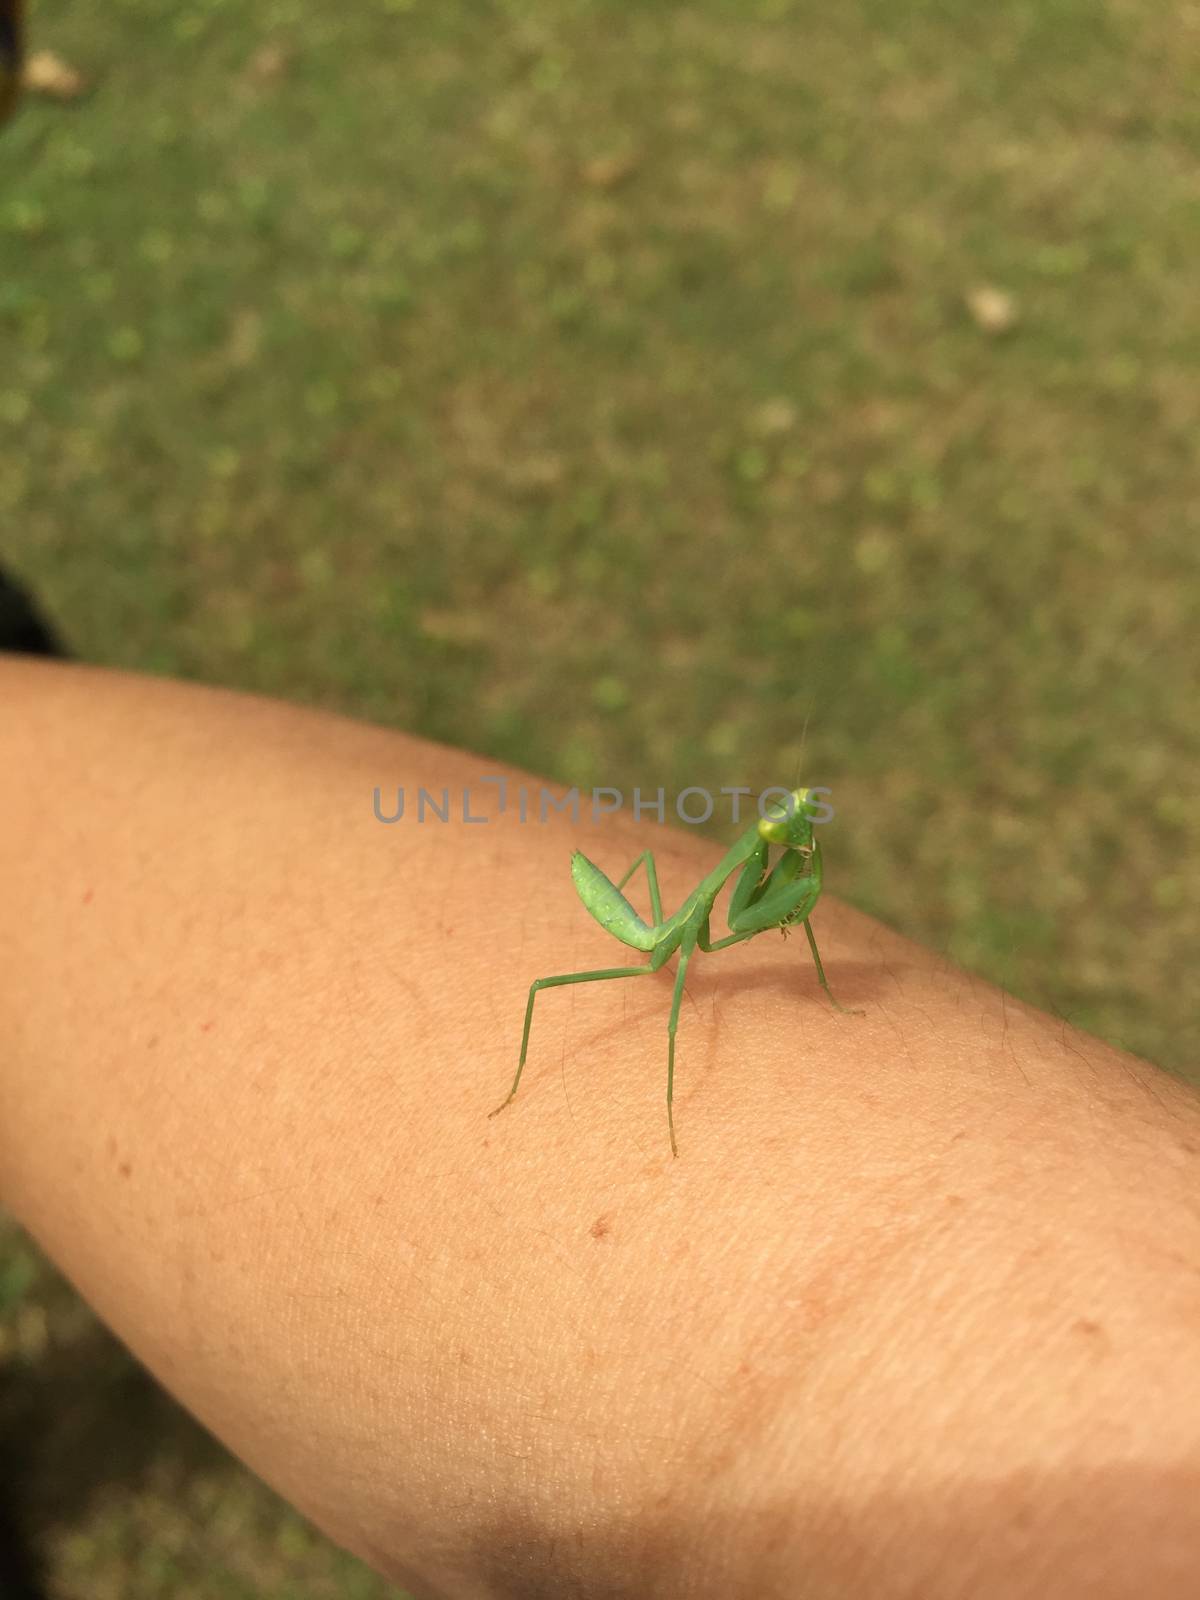 little green mantis on her arm